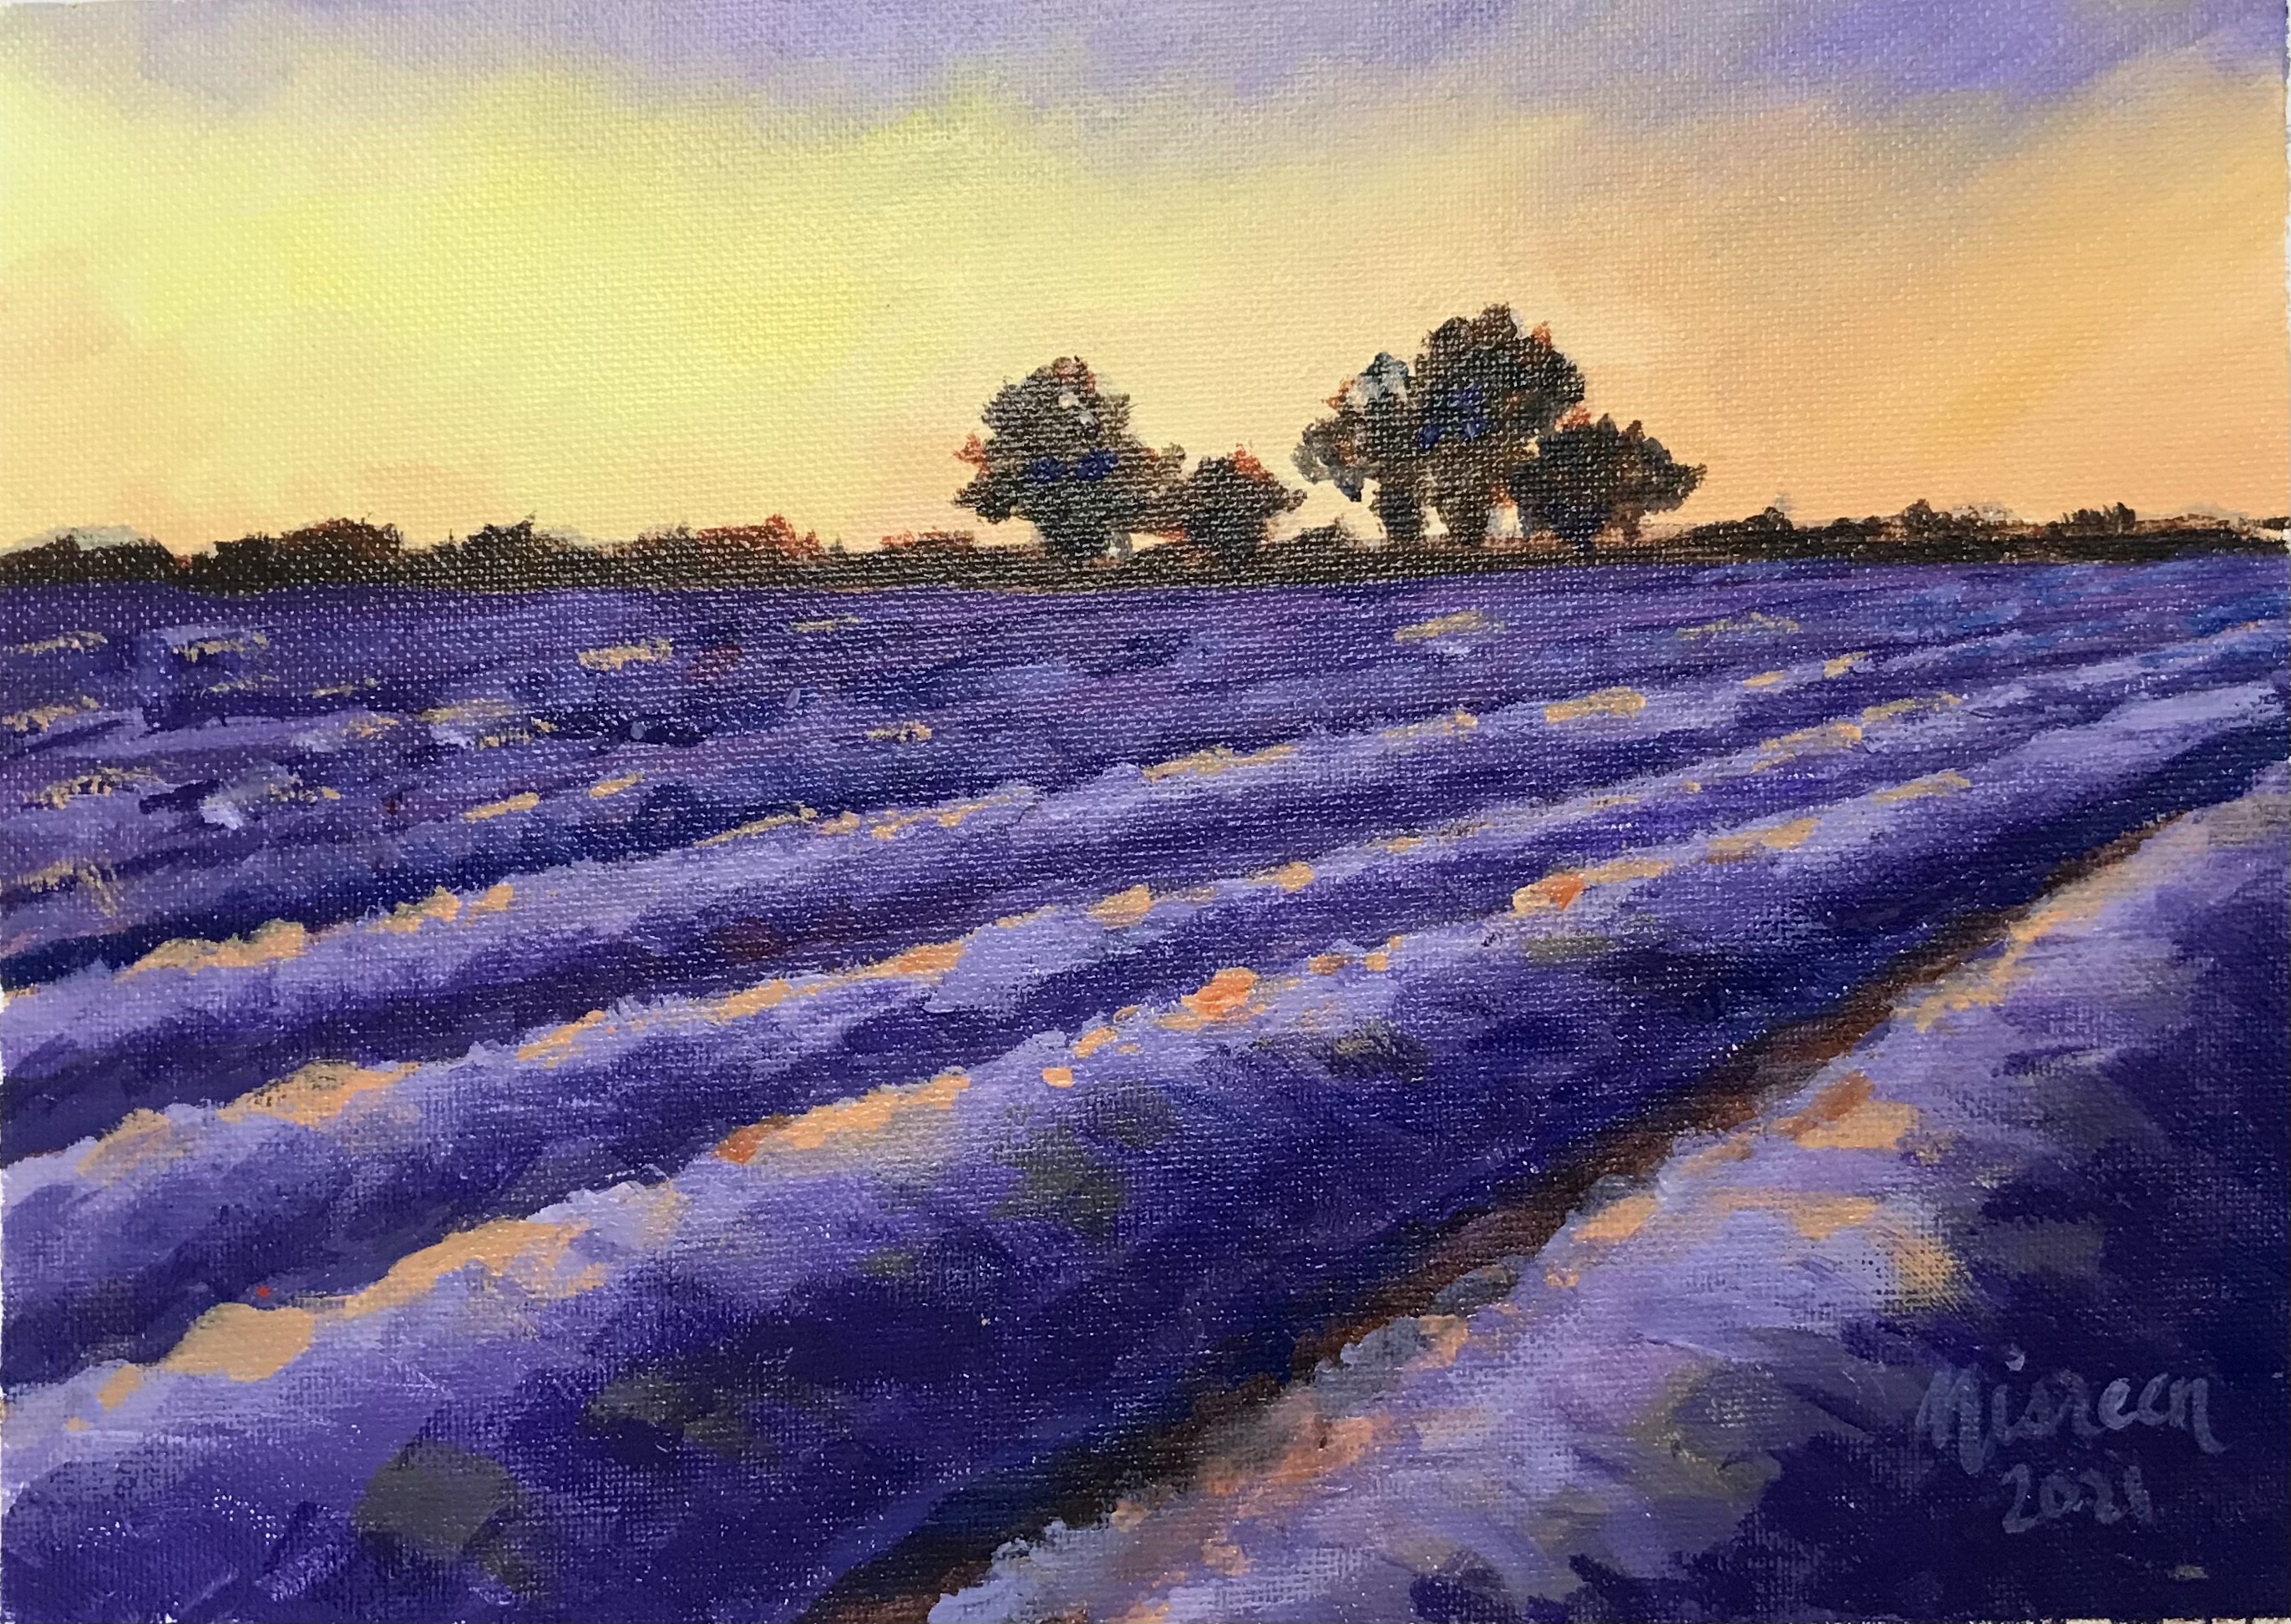 Lavender fields by Nisreen Amiruddeen